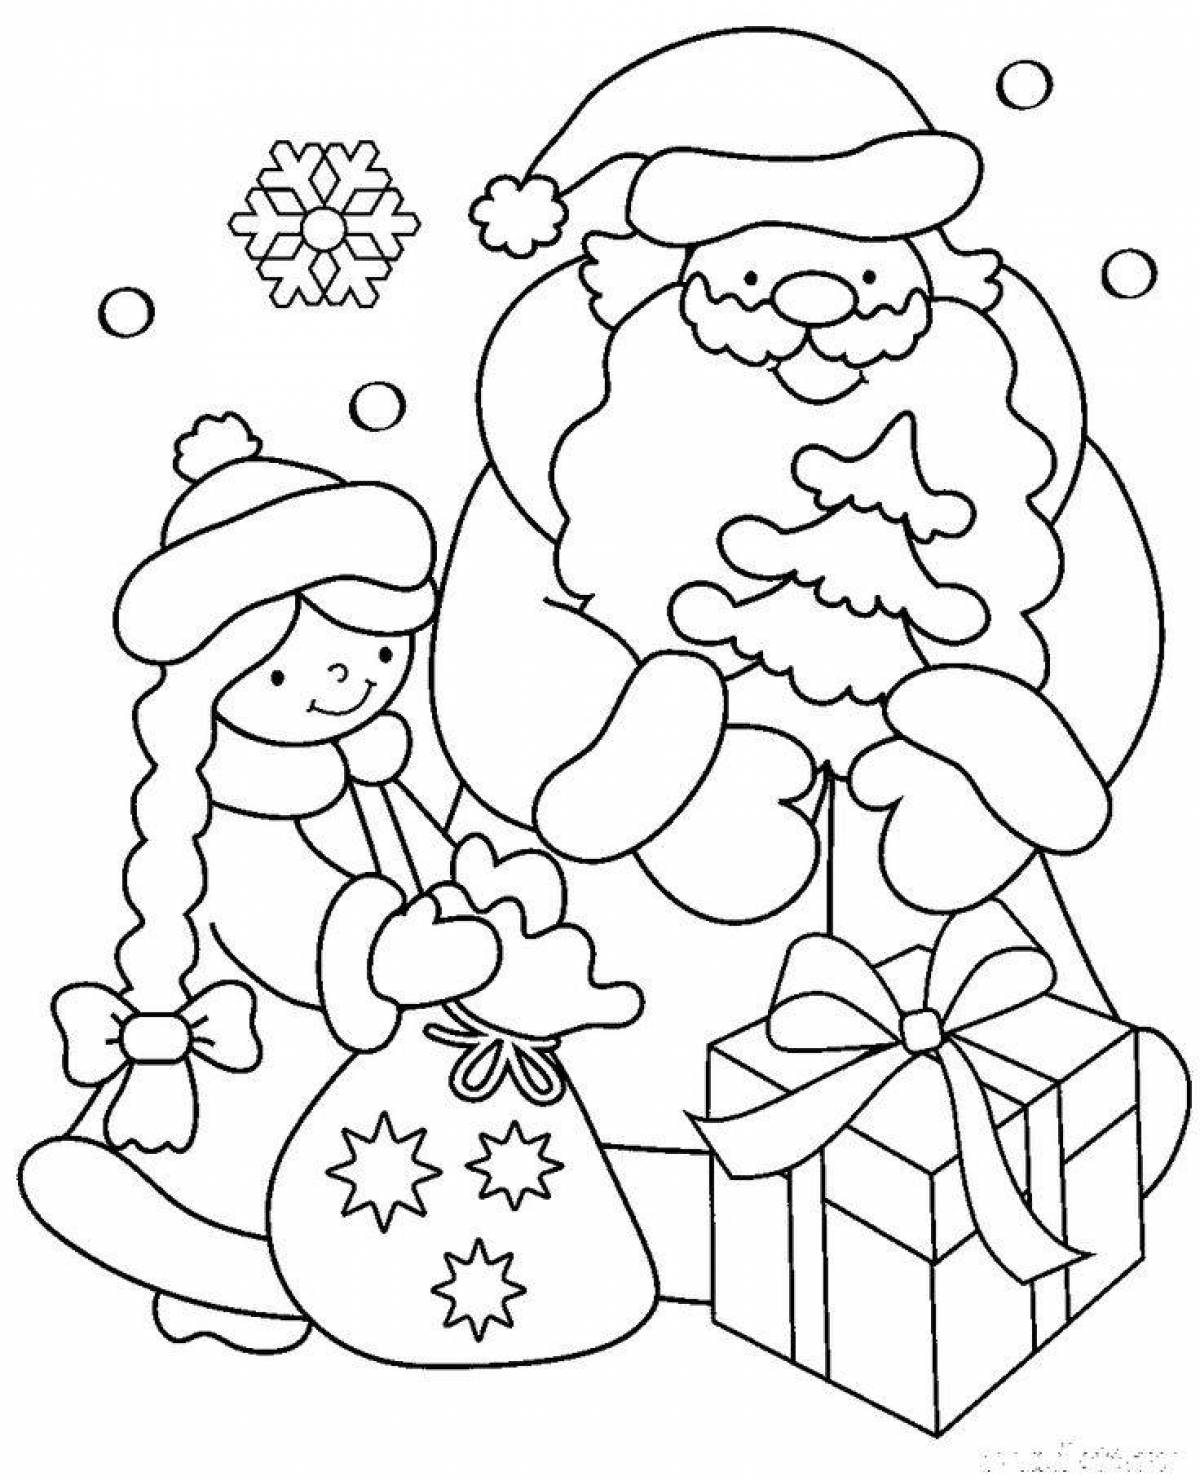 Violent children's Christmas coloring book